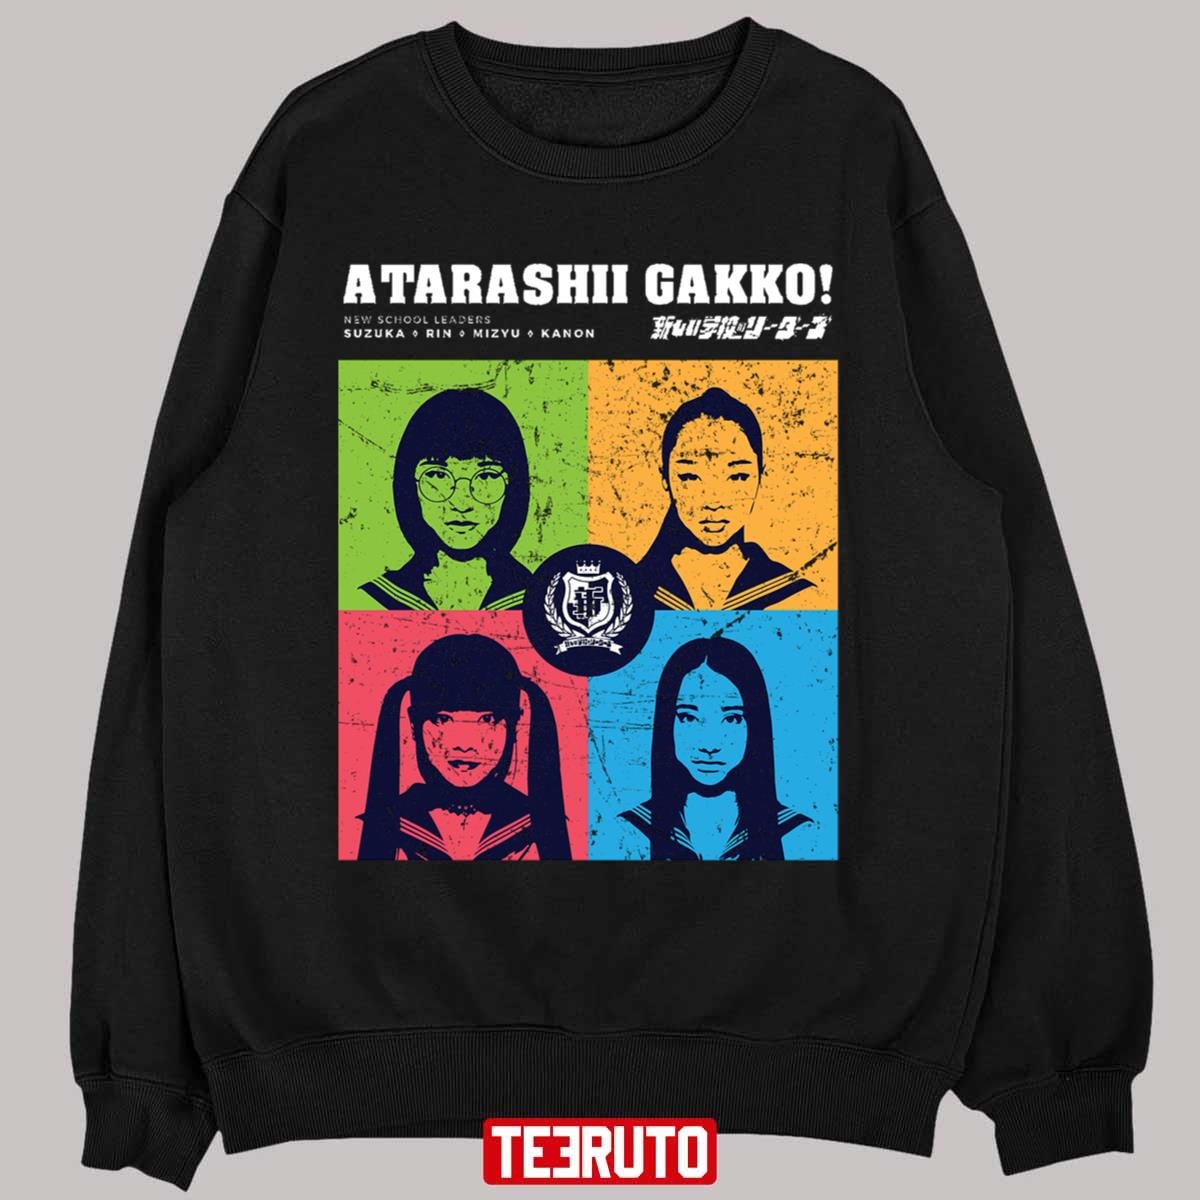 Portraits Grunged Atarashii Gakko No Leaders Light Ver Unisex T-shirt